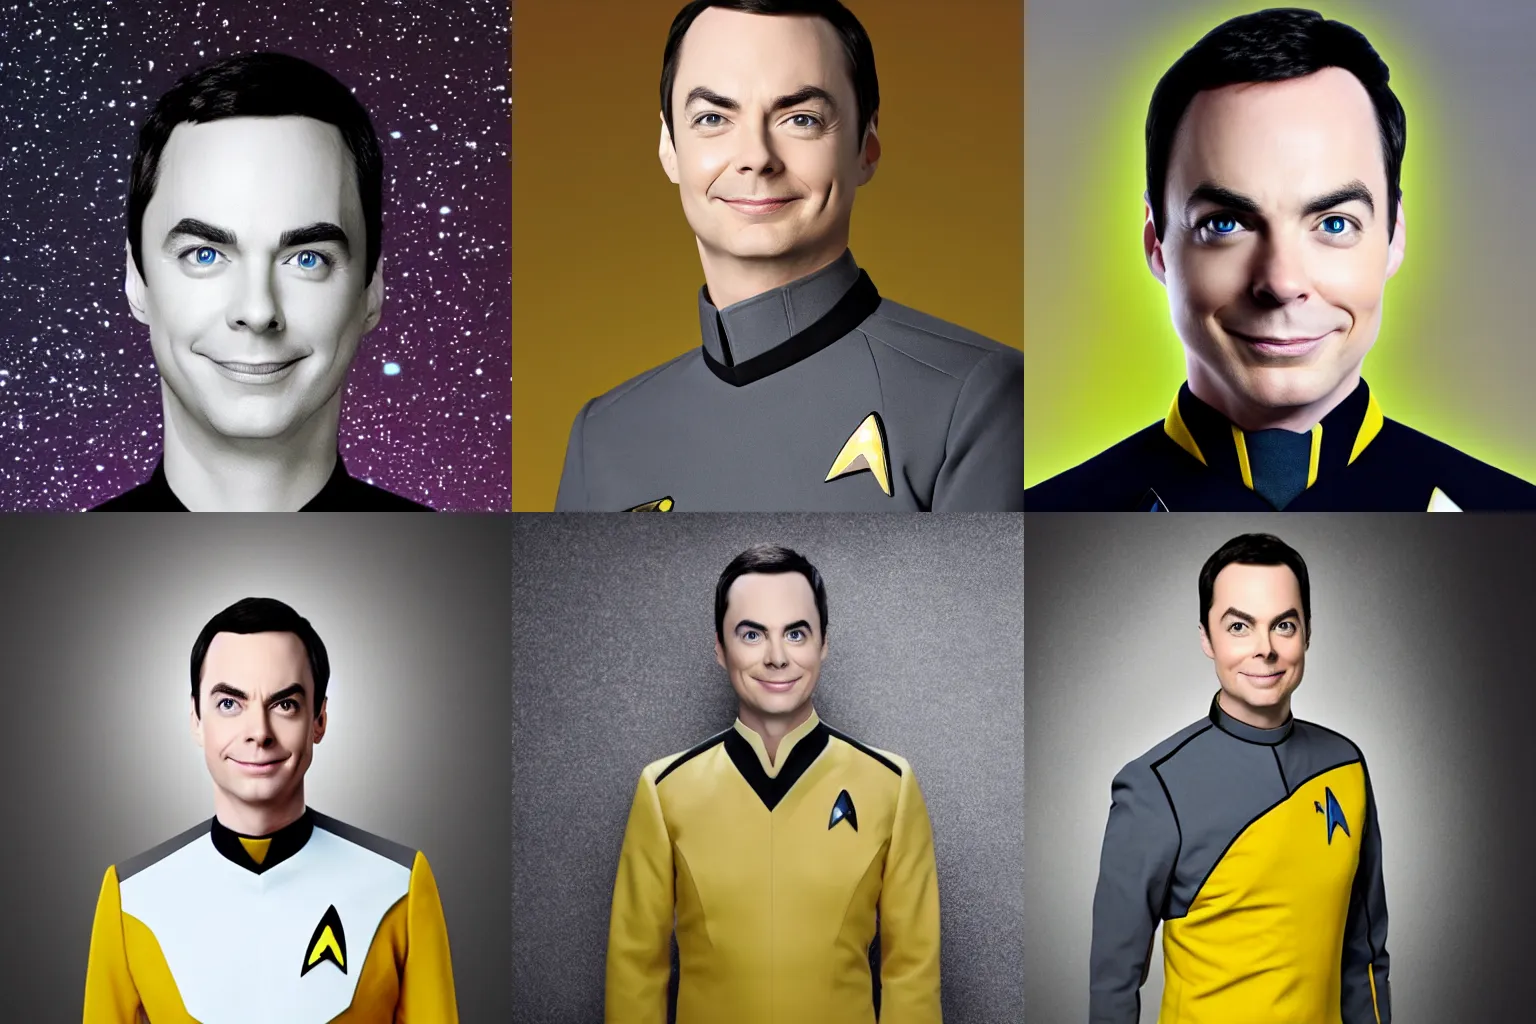 Prompt: Jim Parsons ad commander data, star trek , yellow uniform,grey skin, grey eyes, galaxy as background